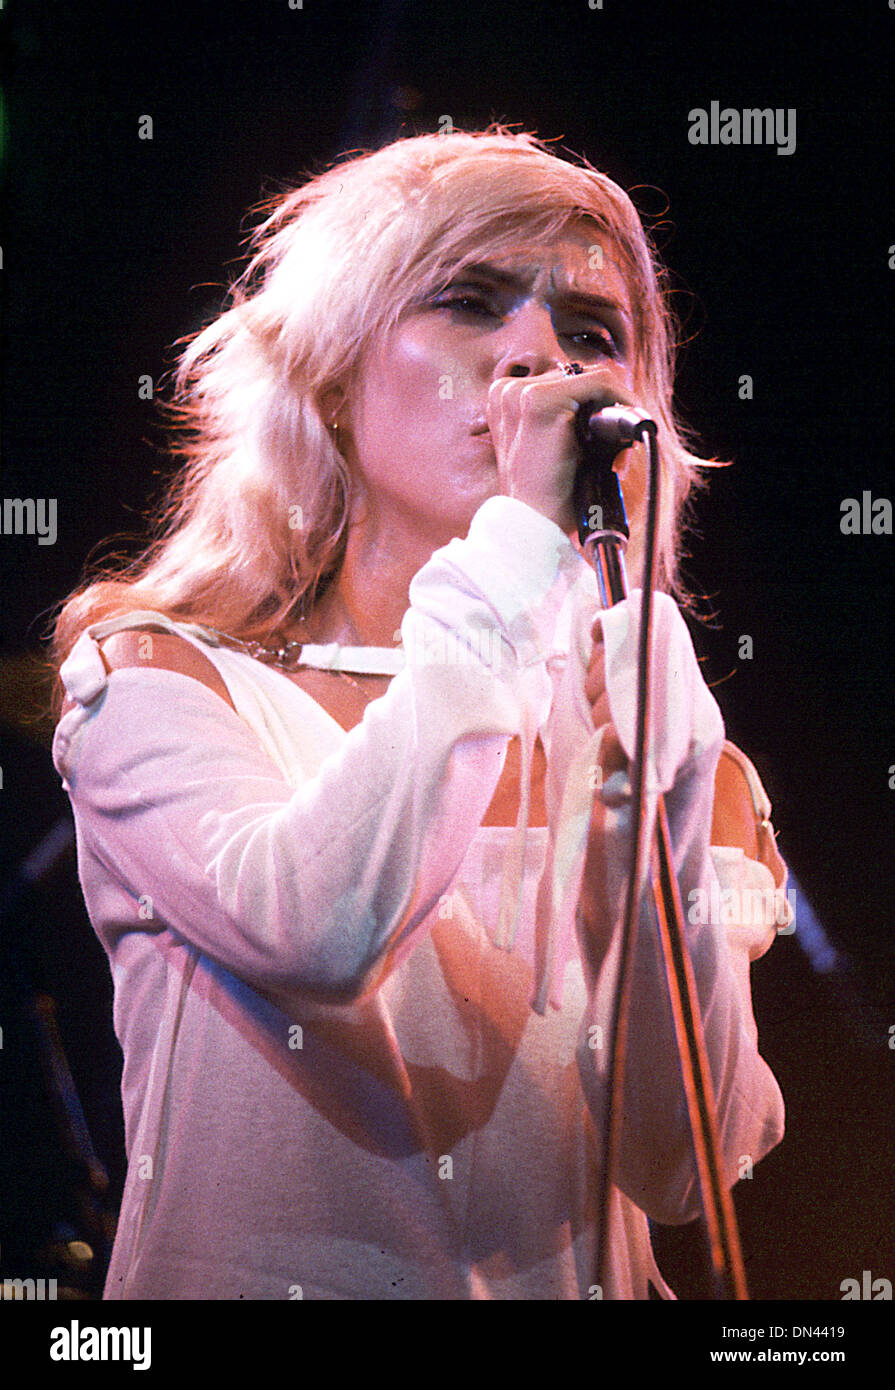 BLONDIE Debbie Harry cantante statunitense circa 1978 Foto Stock